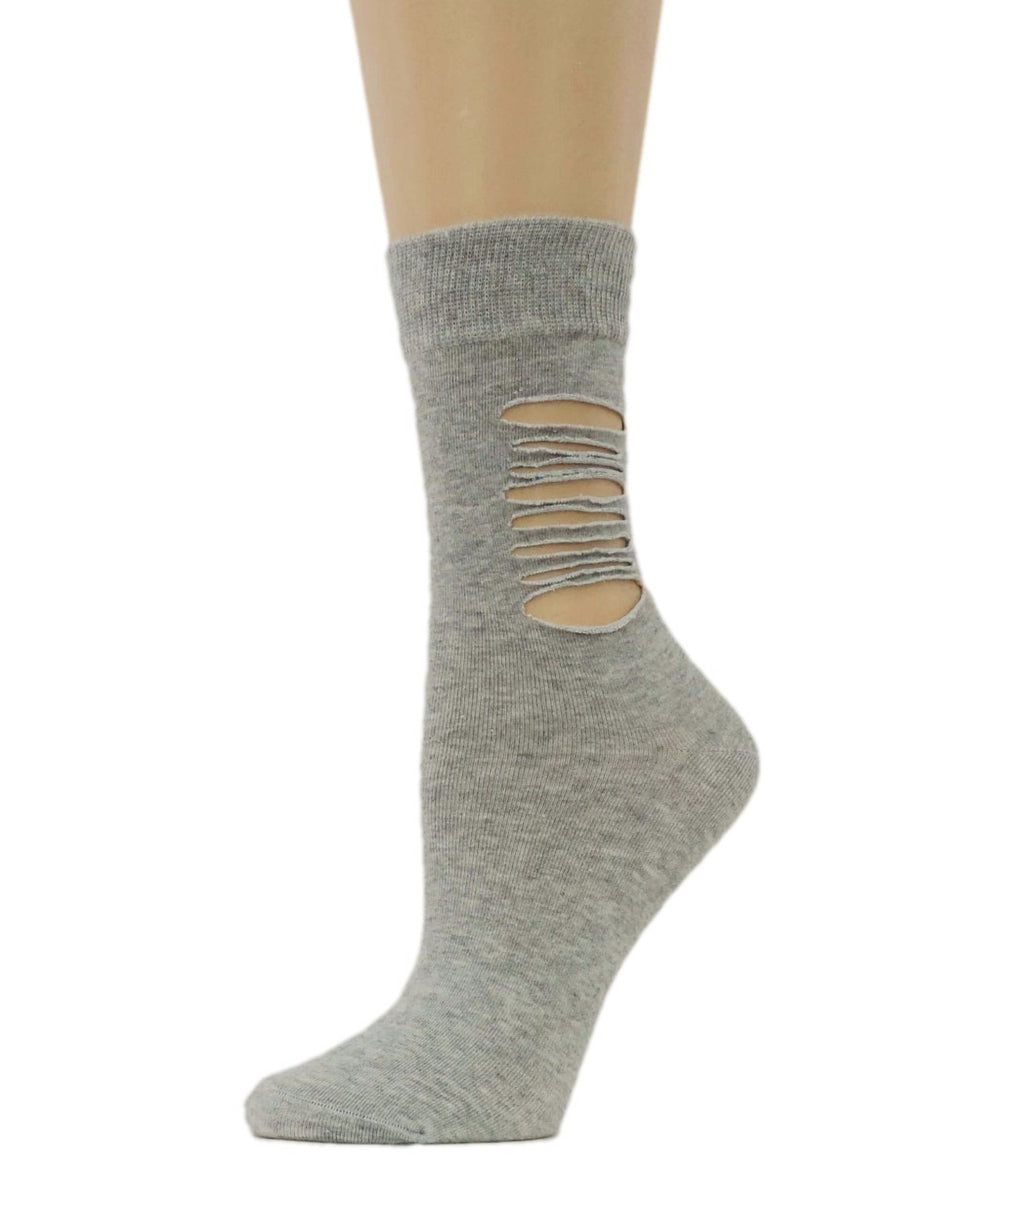 Ripped Grey Cotton Socks - Global Trendz Fashion®